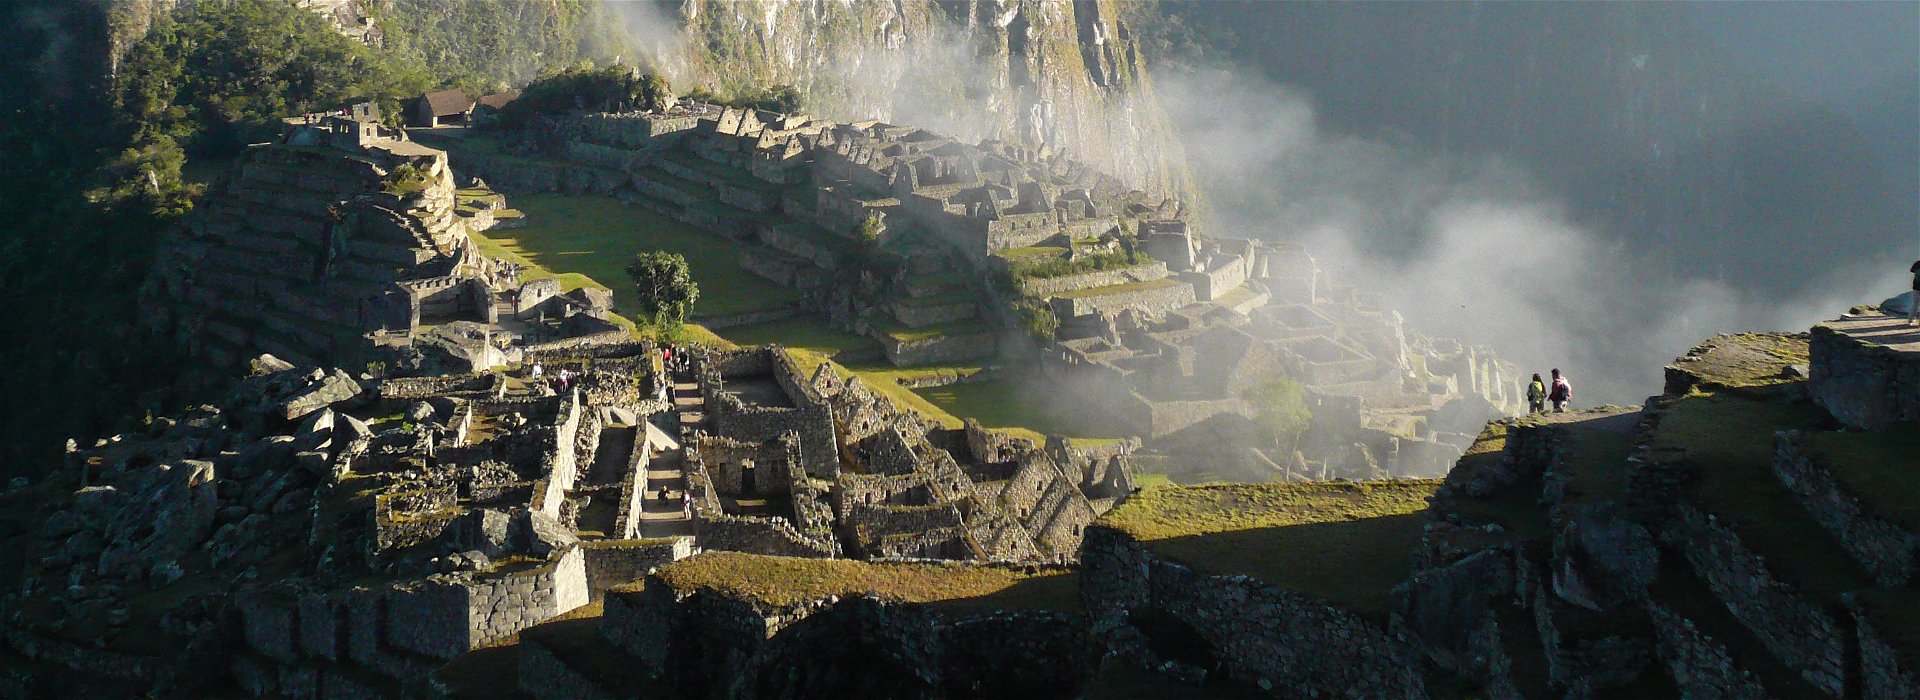 Why trek the Inca Trail with KE?